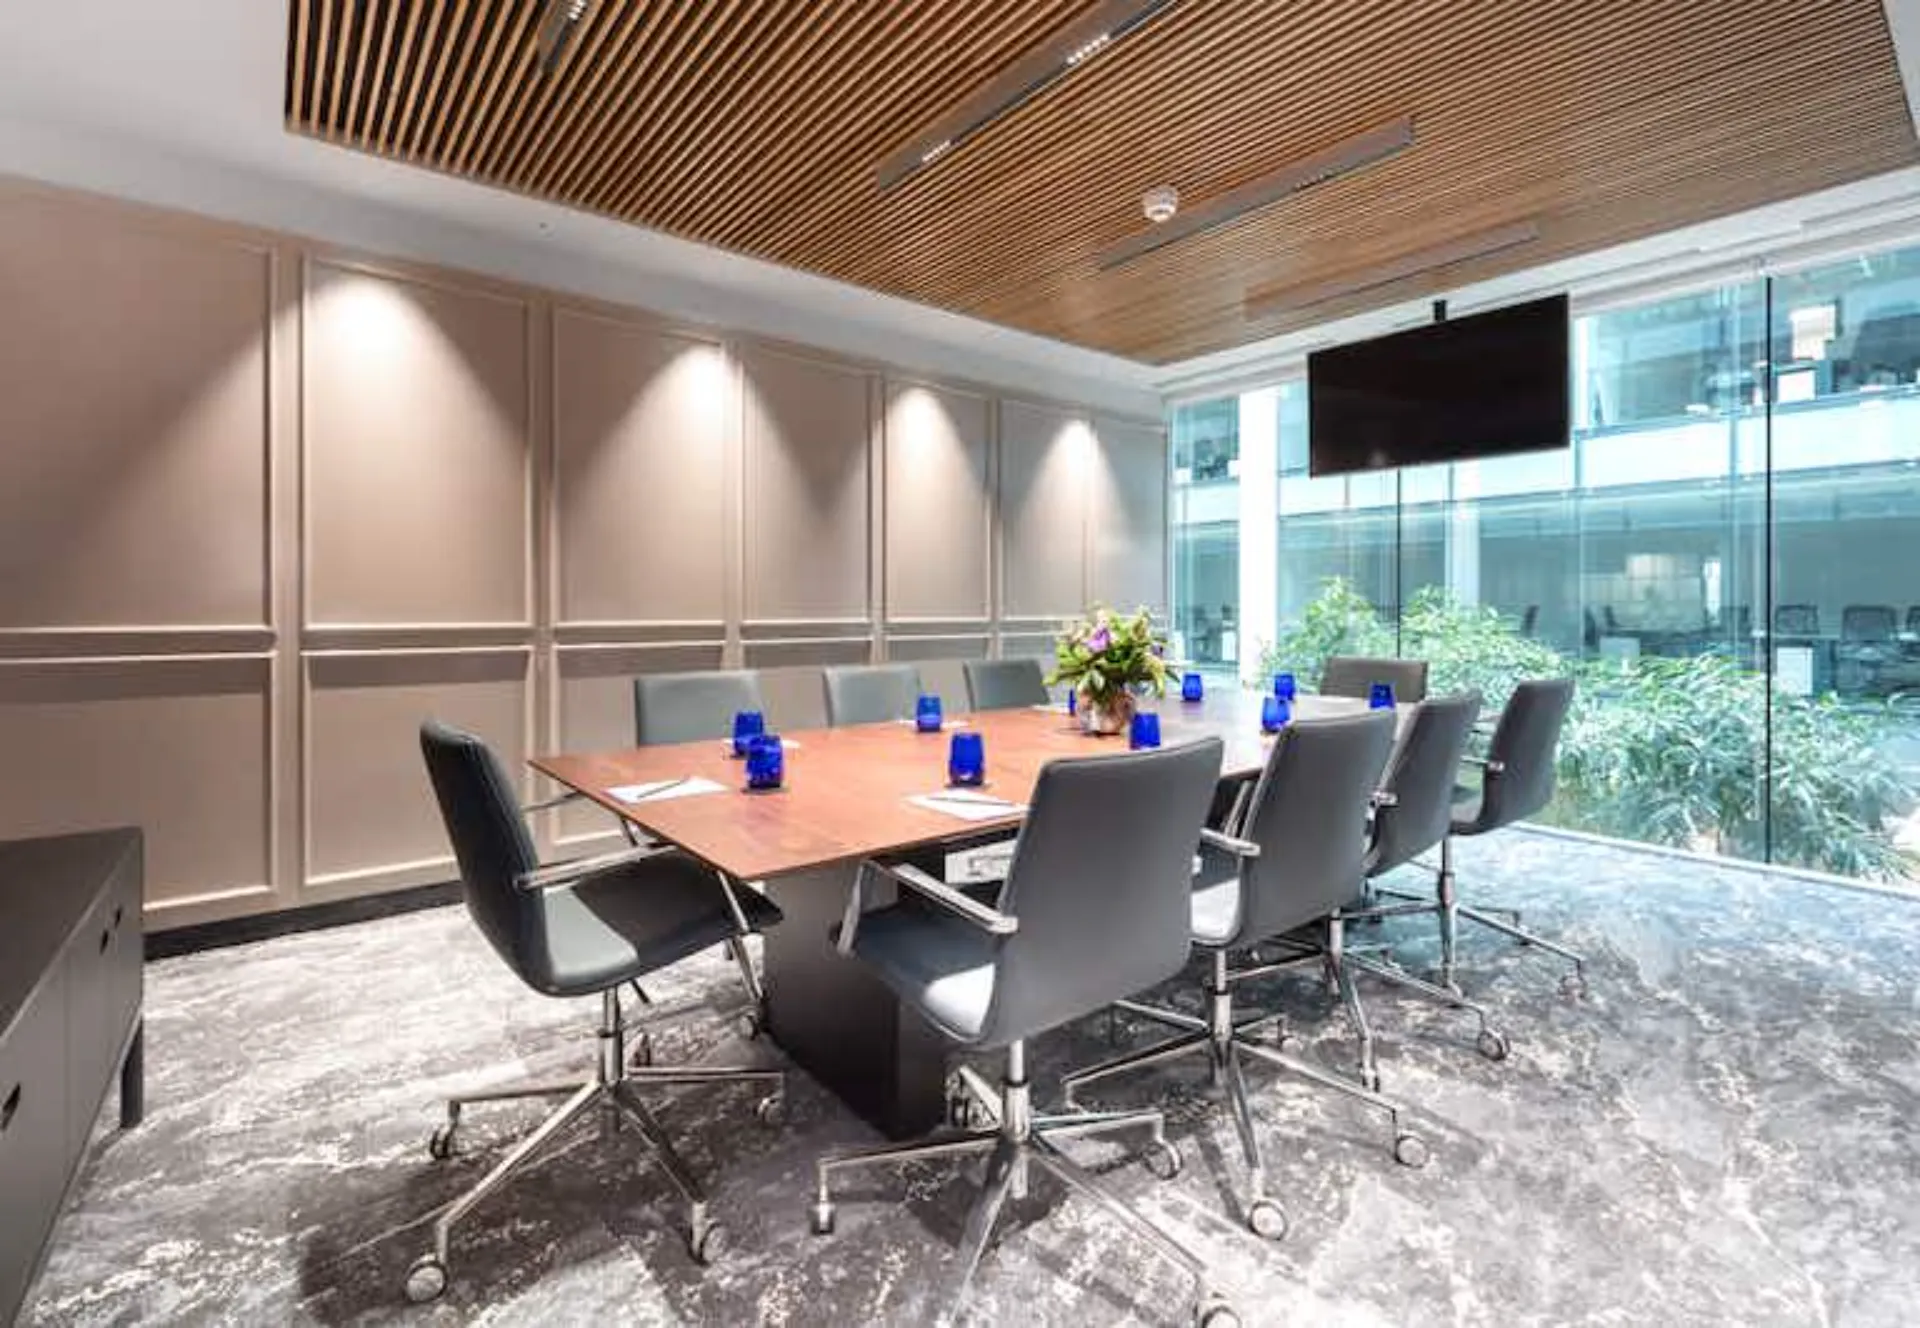 Landmark meeting room venue hire spacious light boardroom conference room presentations